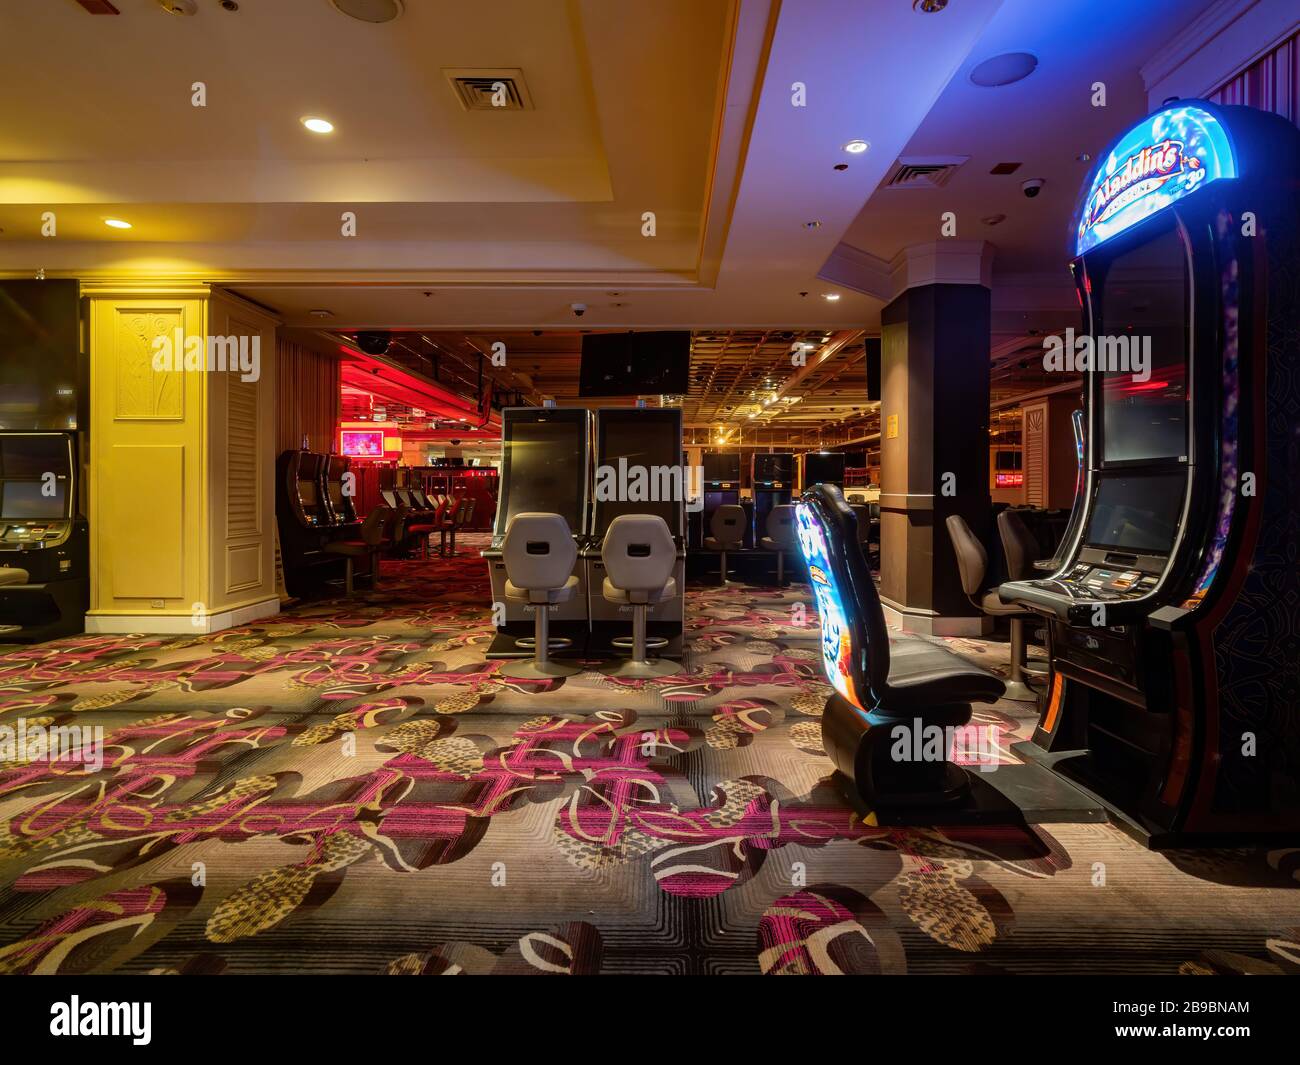 Las Vegas, MAR 23, 2020 - Interior view of the closed Flamingo Casino Stock Photo